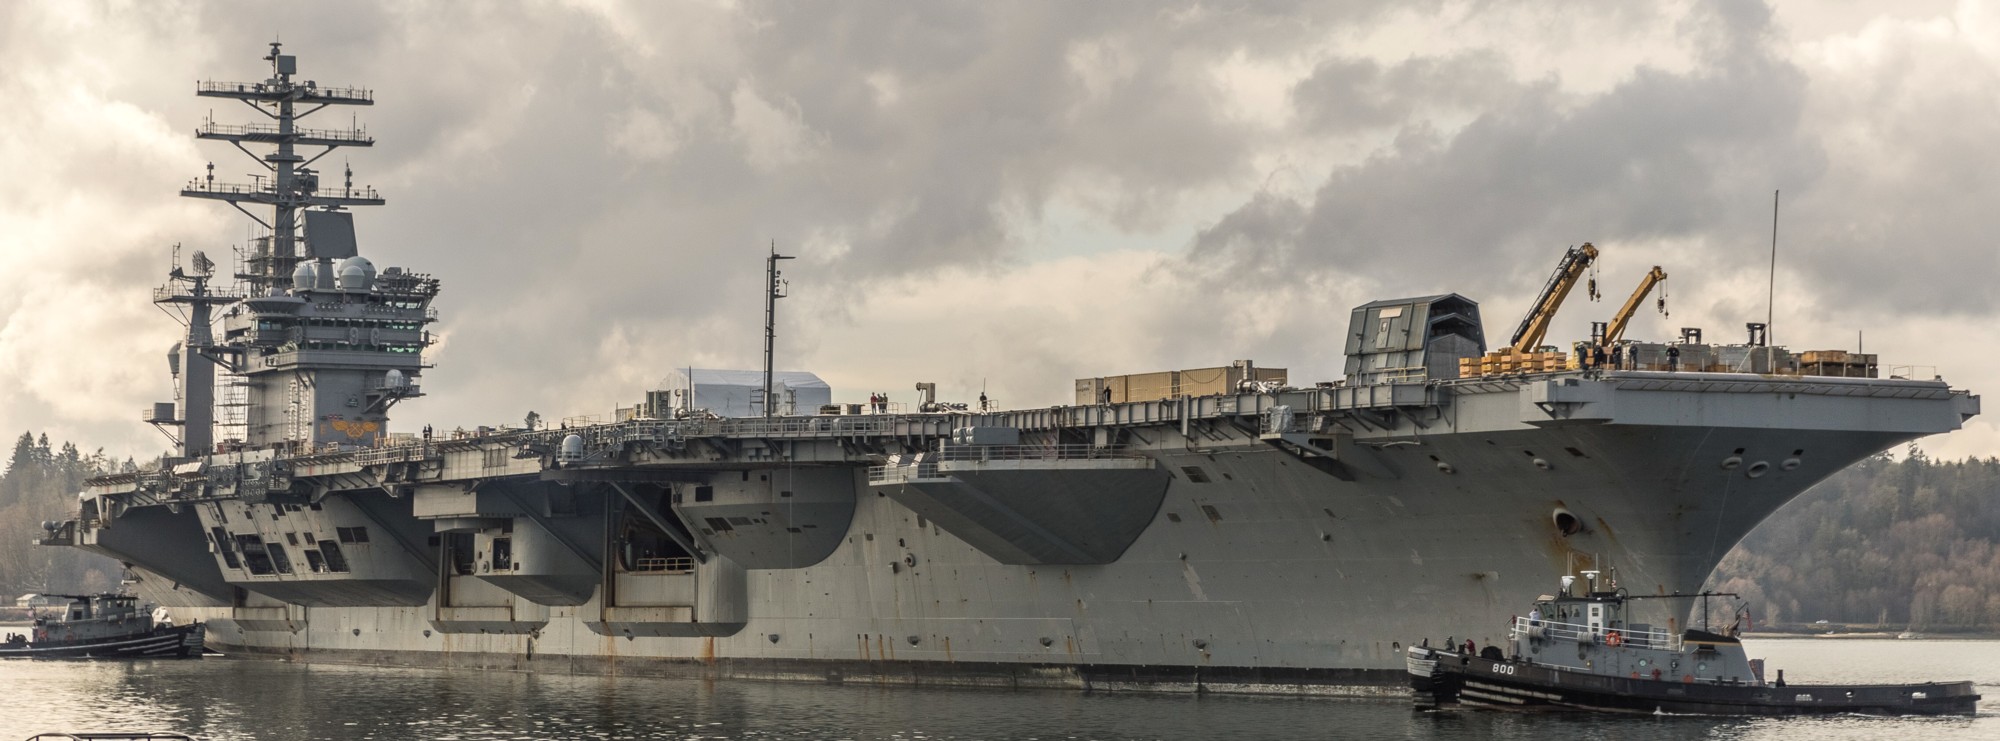 cvn-68 uss nimitz aircraft carrier us navy puget sound naval shipyard intermediate maintenance facility dpia 234